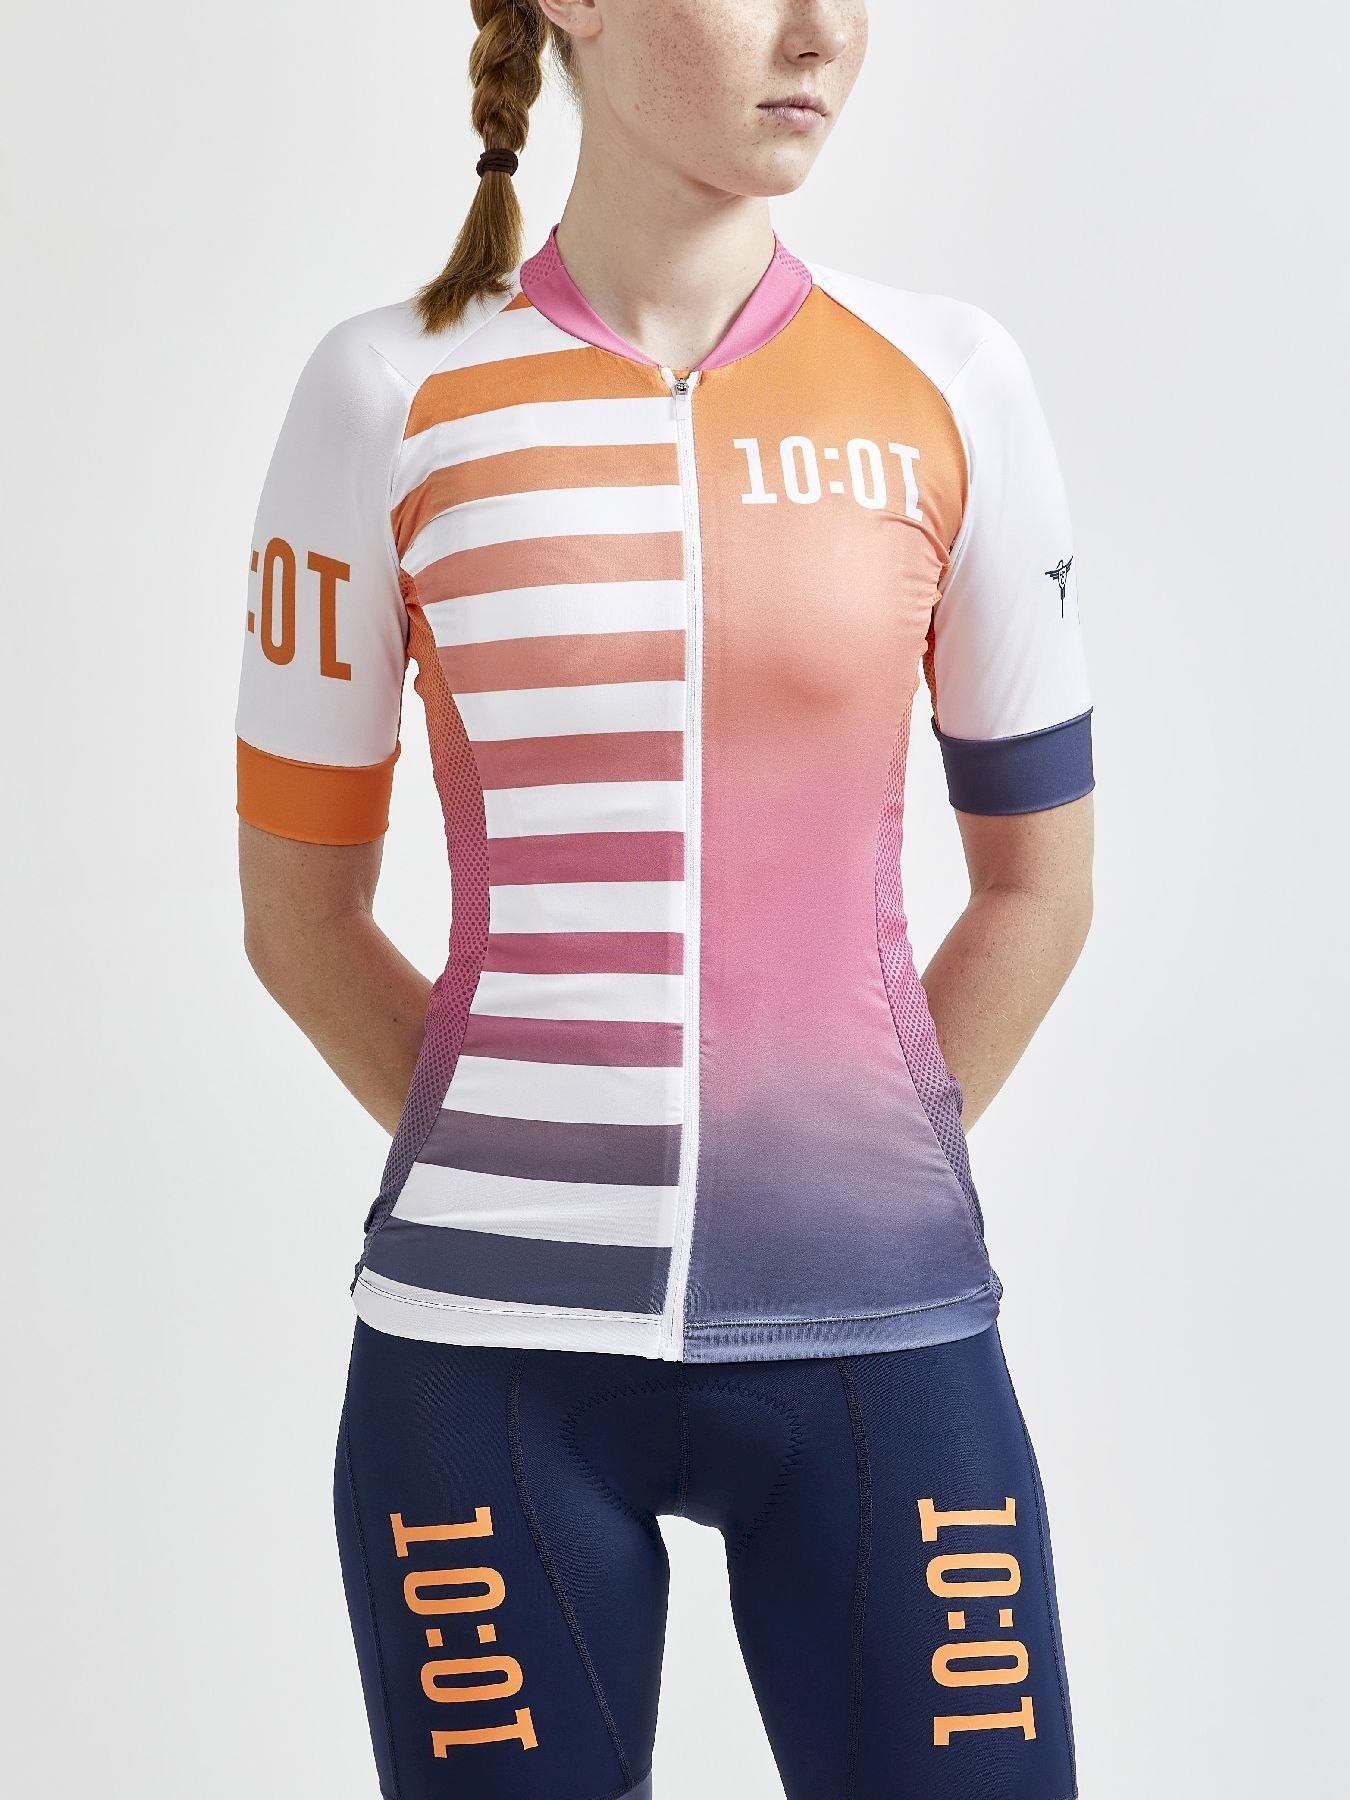 Craft Adv Hmc Endurance Graphic Jersey - Maillot ciclismo - Mujer